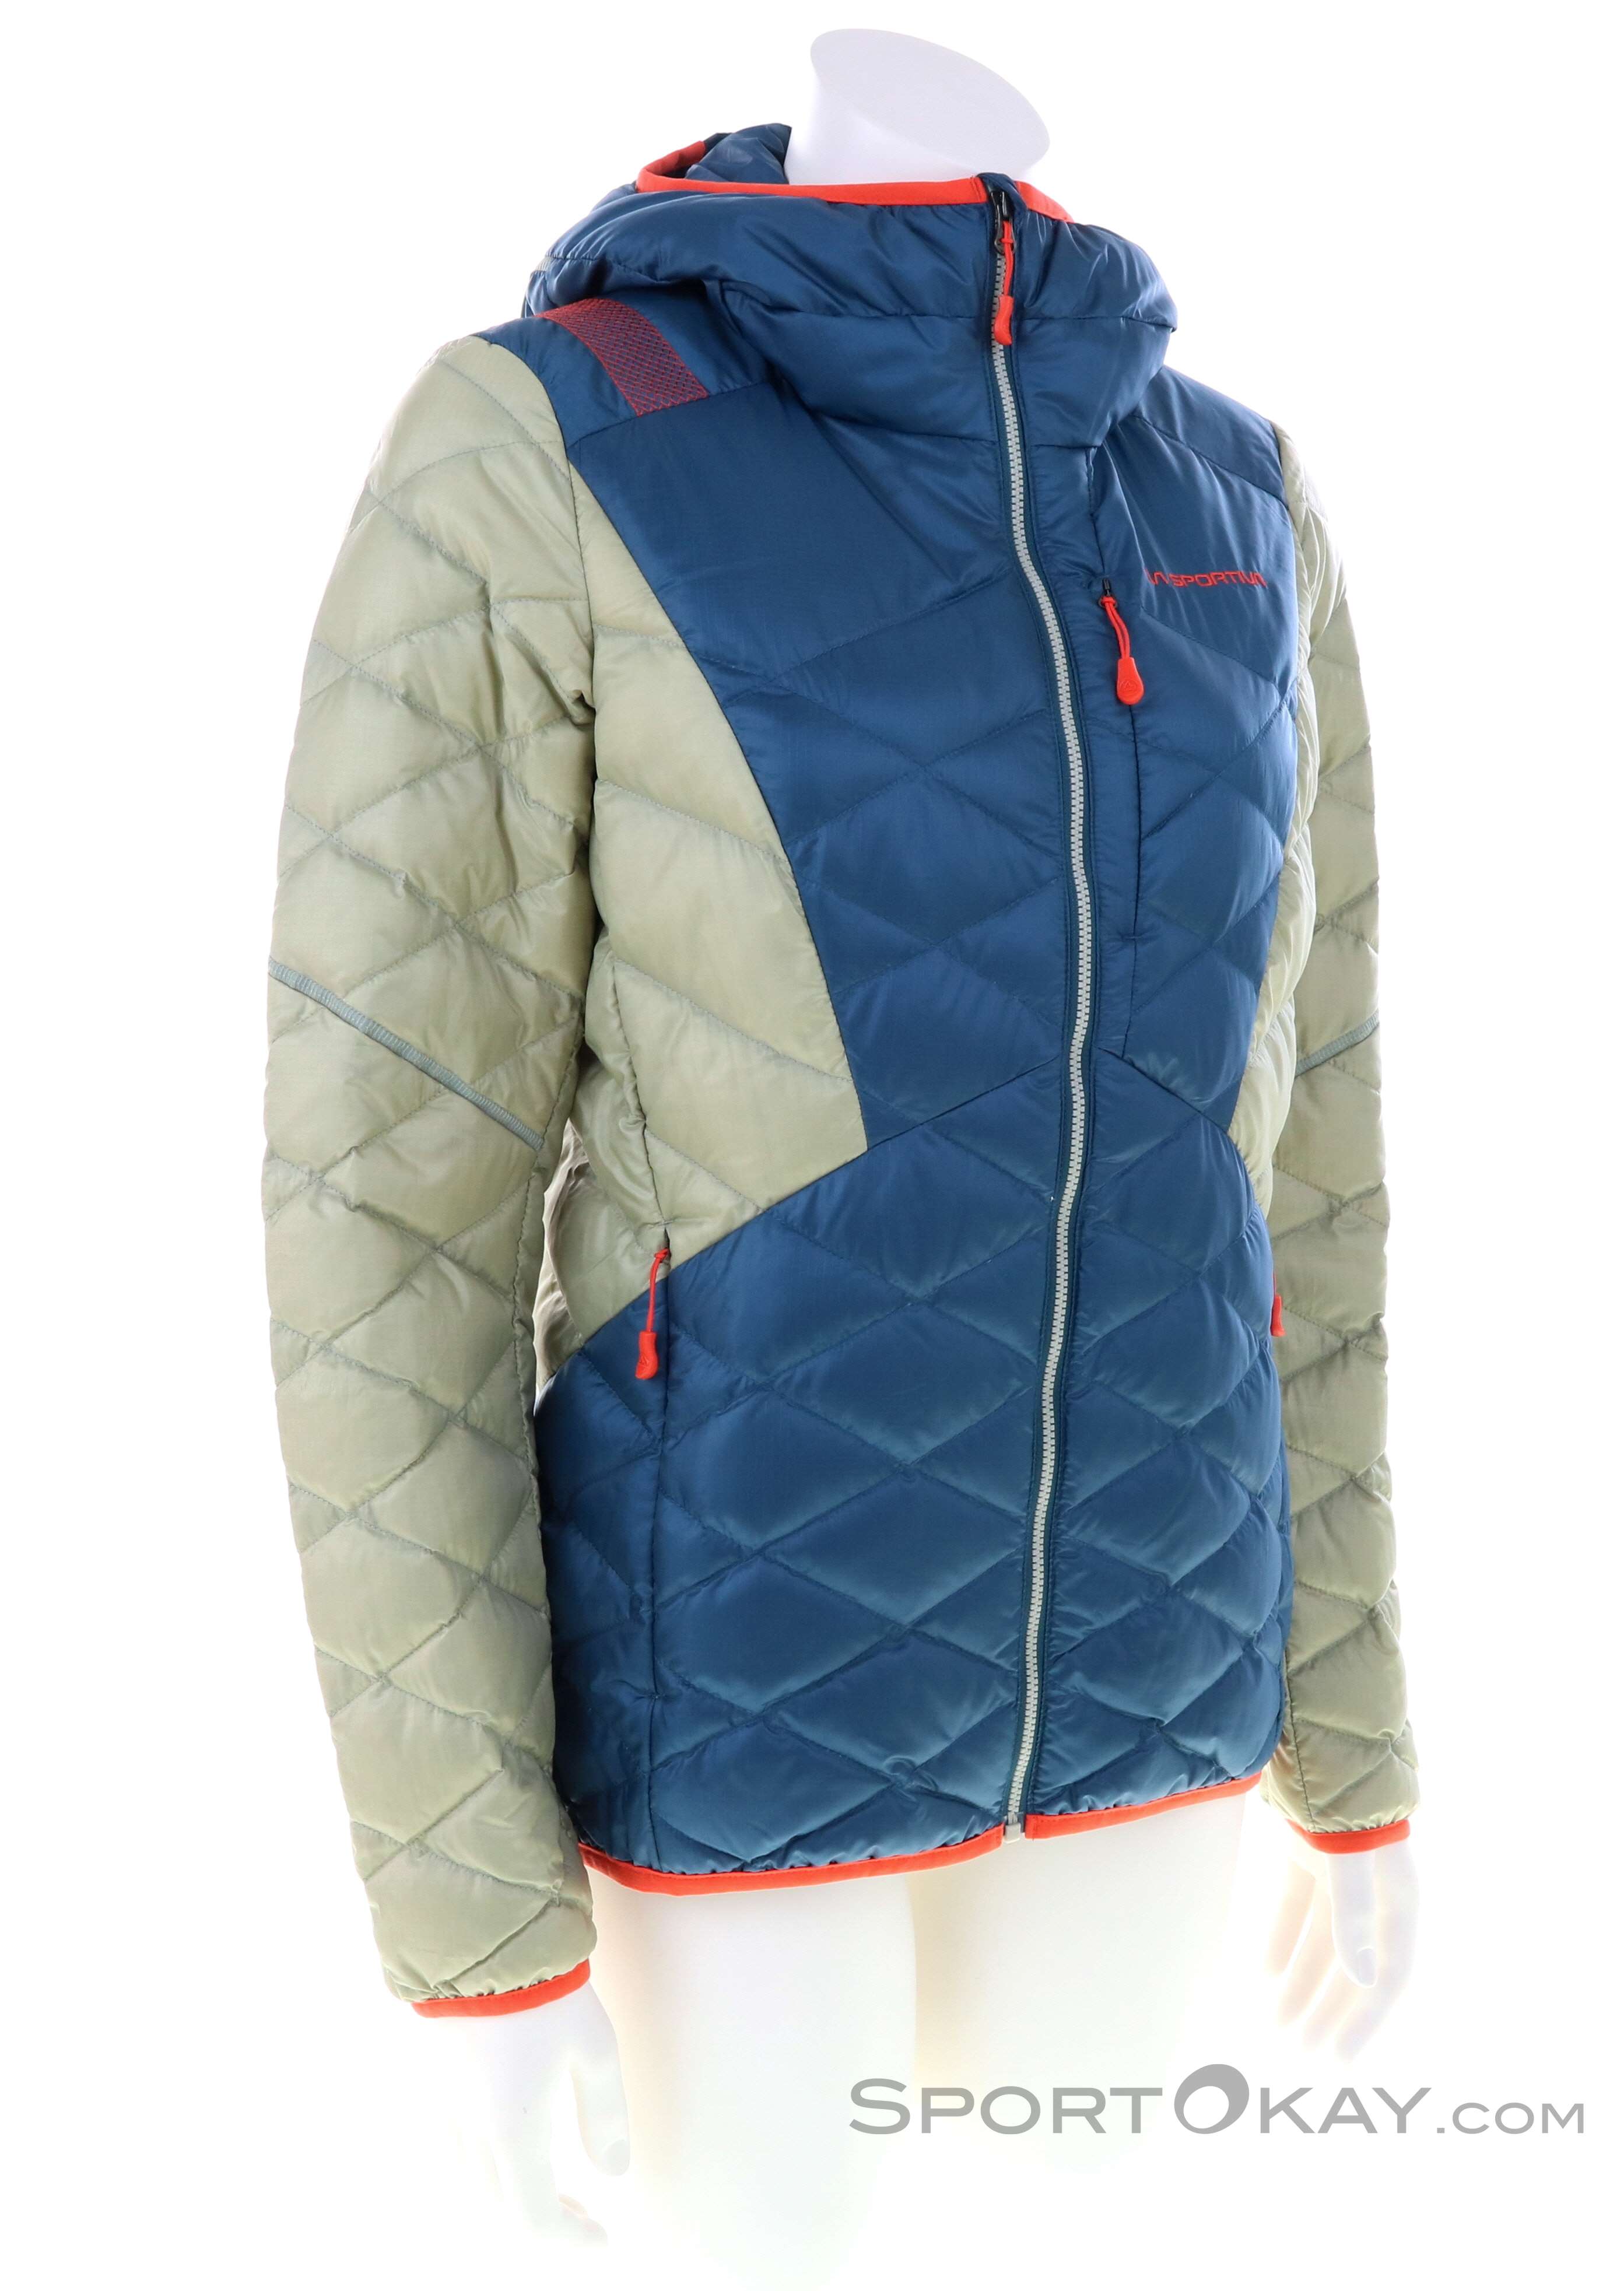 La Sportiva Outdoor - Outdoor All - - Jacket - Clothing Pinnacle Touring Women Ski Jackets Down